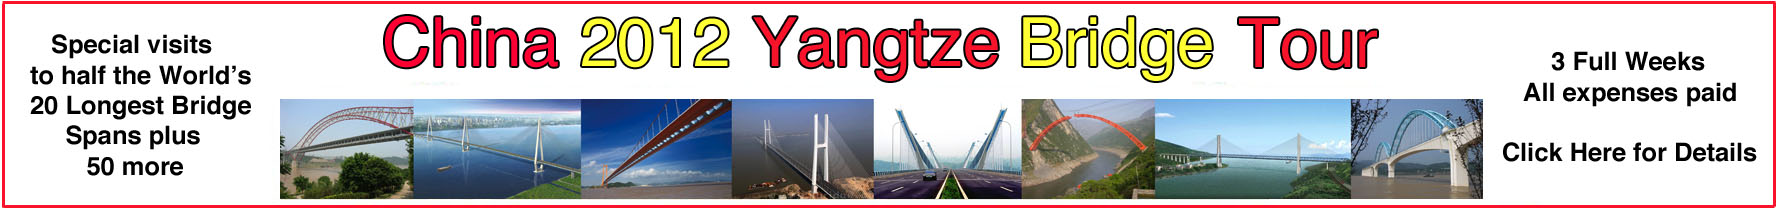 http://highestbridges.com/wiki/index.php?title=China_2012_Bridge_Trip